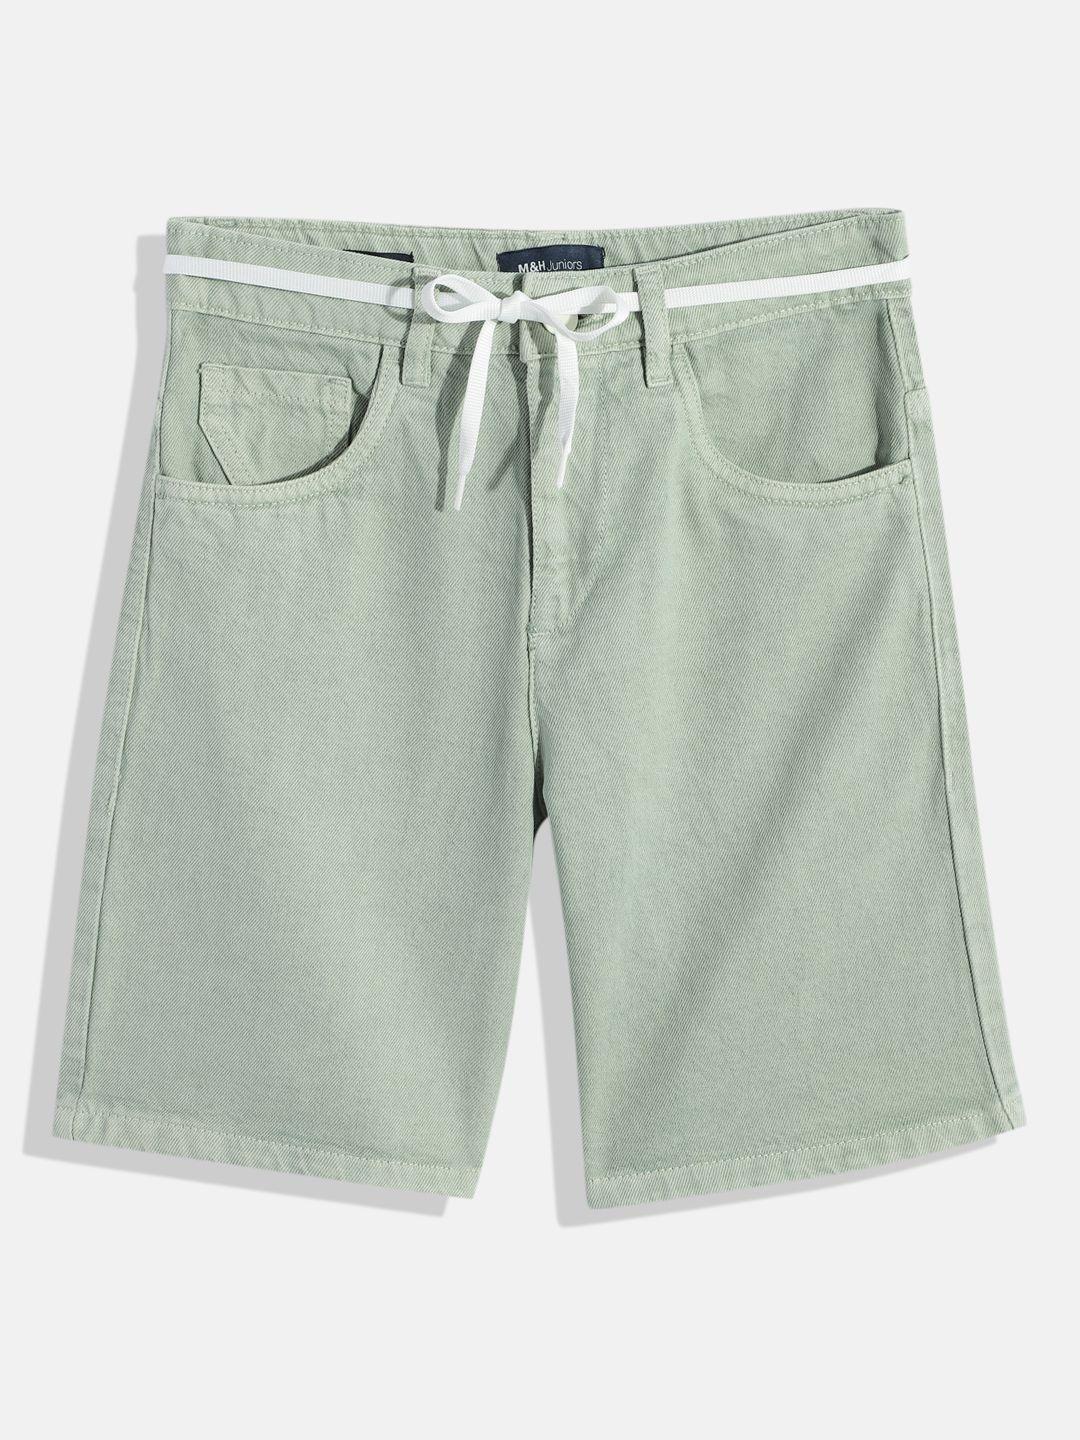 m&h juniors boys solid denim shorts